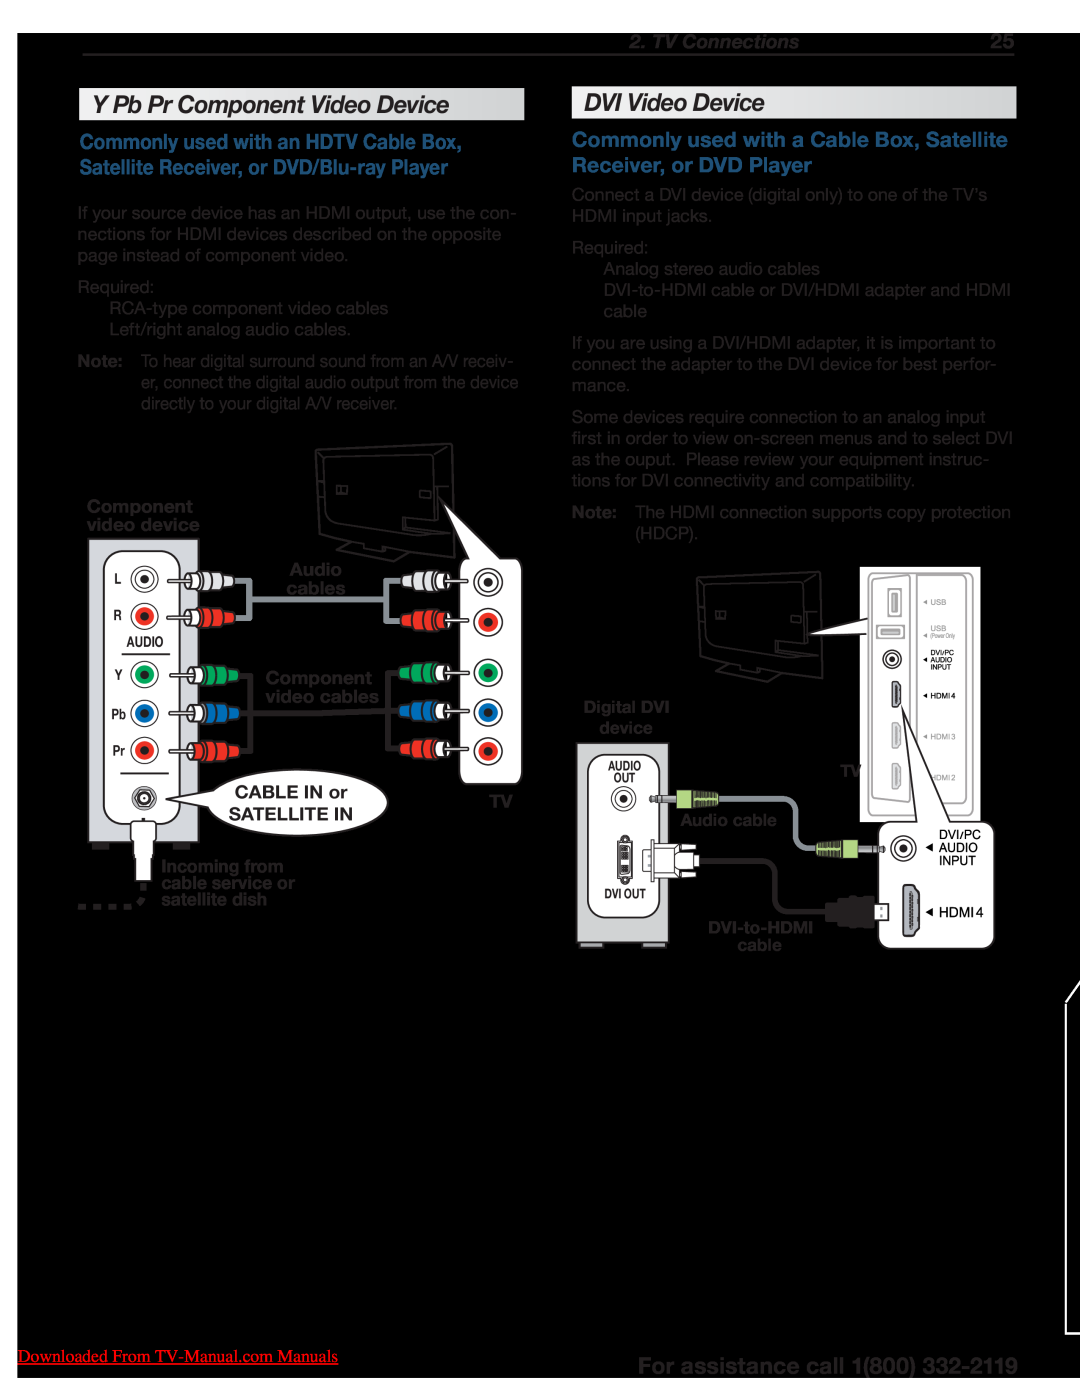 Unisen 164 Series Y Pb Pr Component Video Device, DVI Video Device, Y Component, video cables, CABLE IN or, Satellite In 